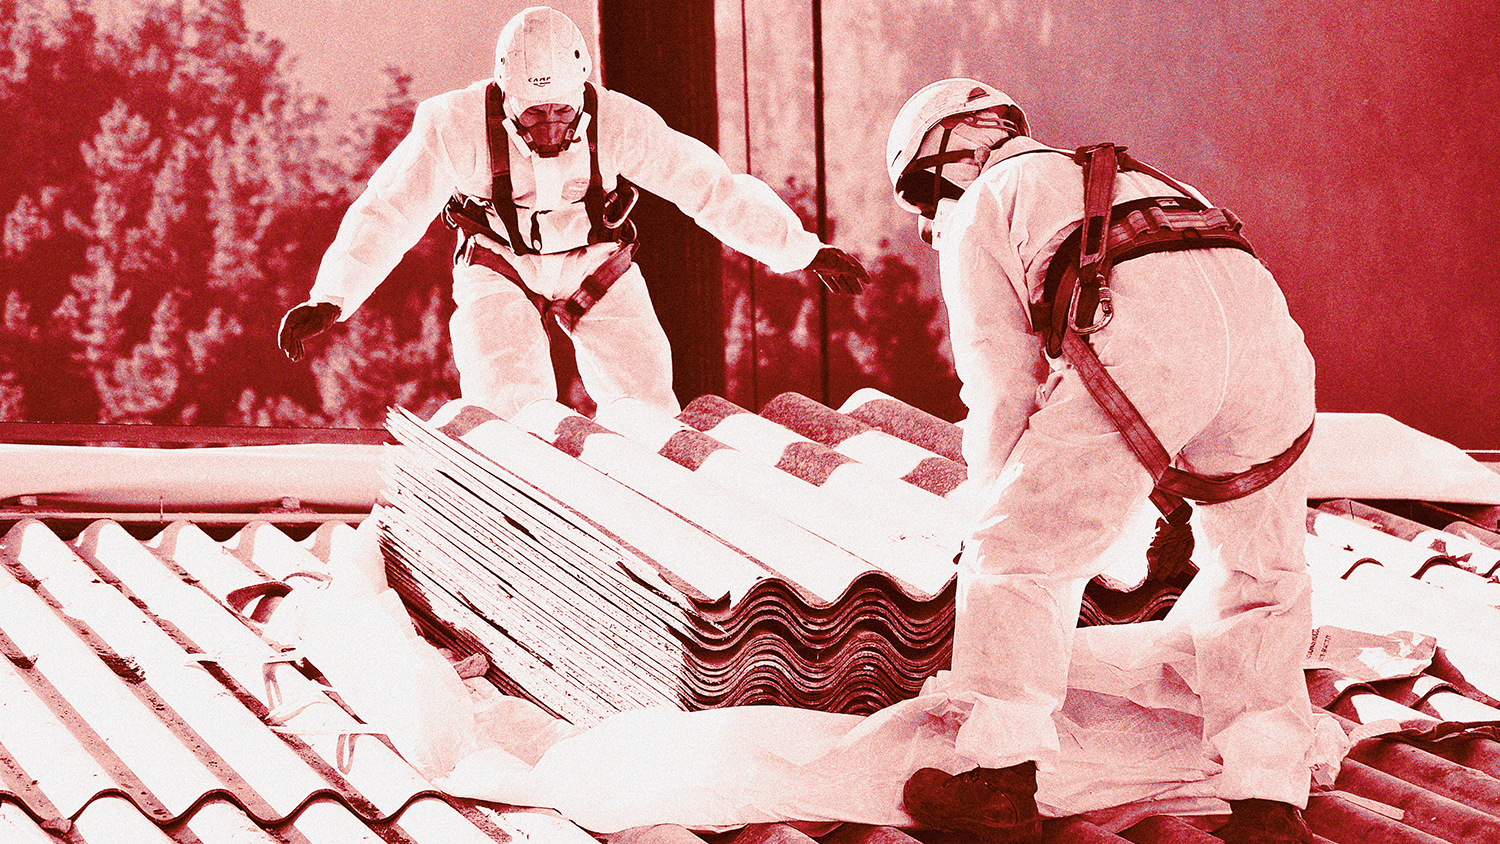 Asbestos: The killer